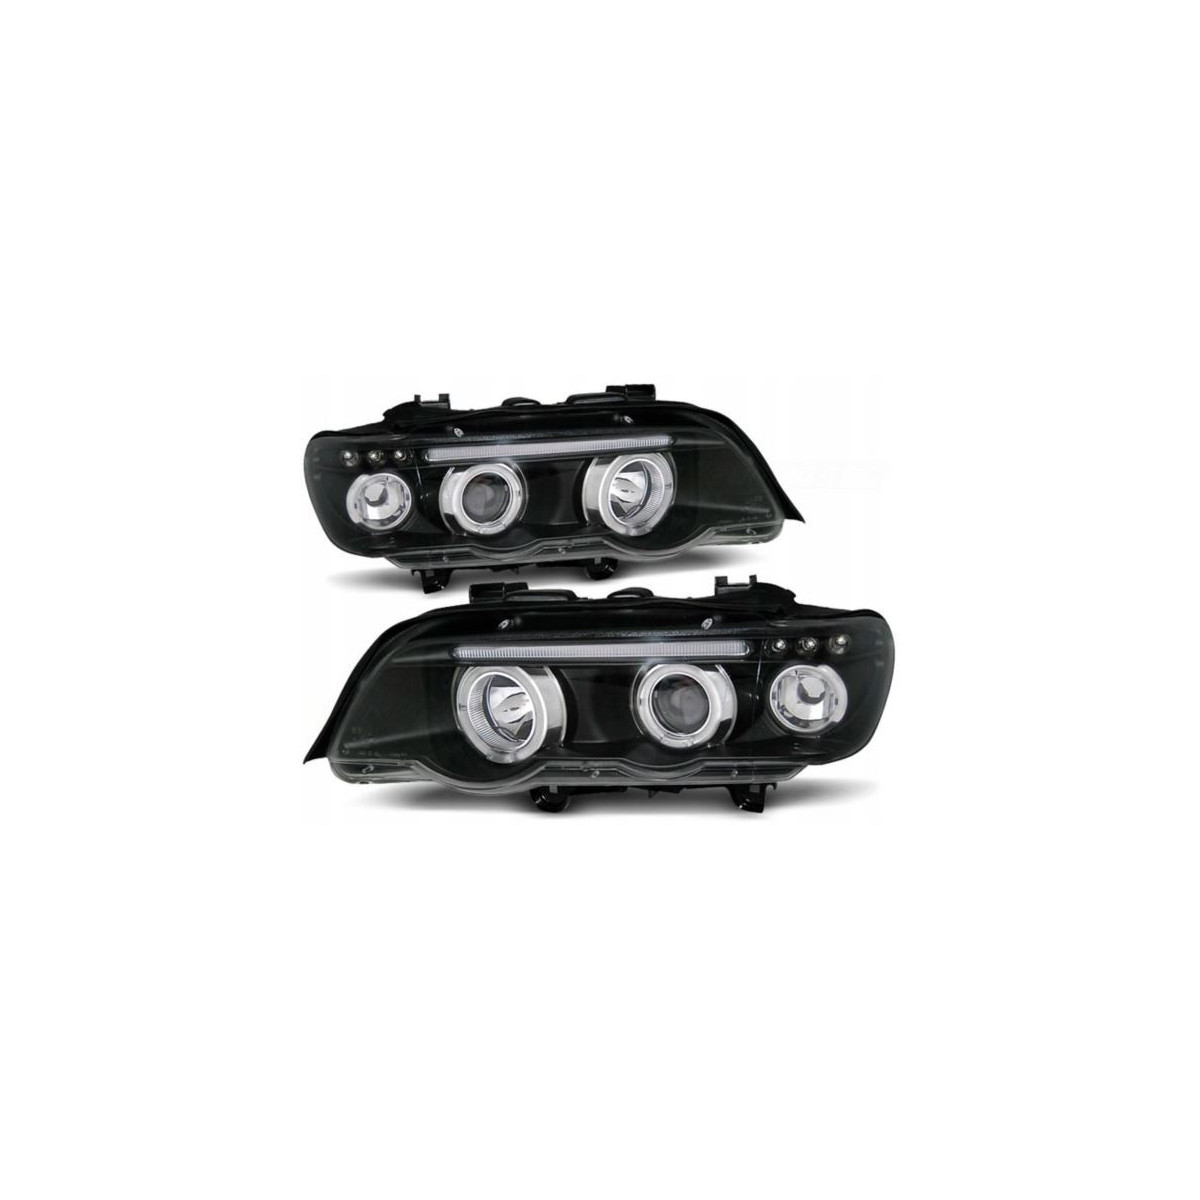 LAMPY REFLEKTORY BMW X5 E53 99-03 RINGI BLACK